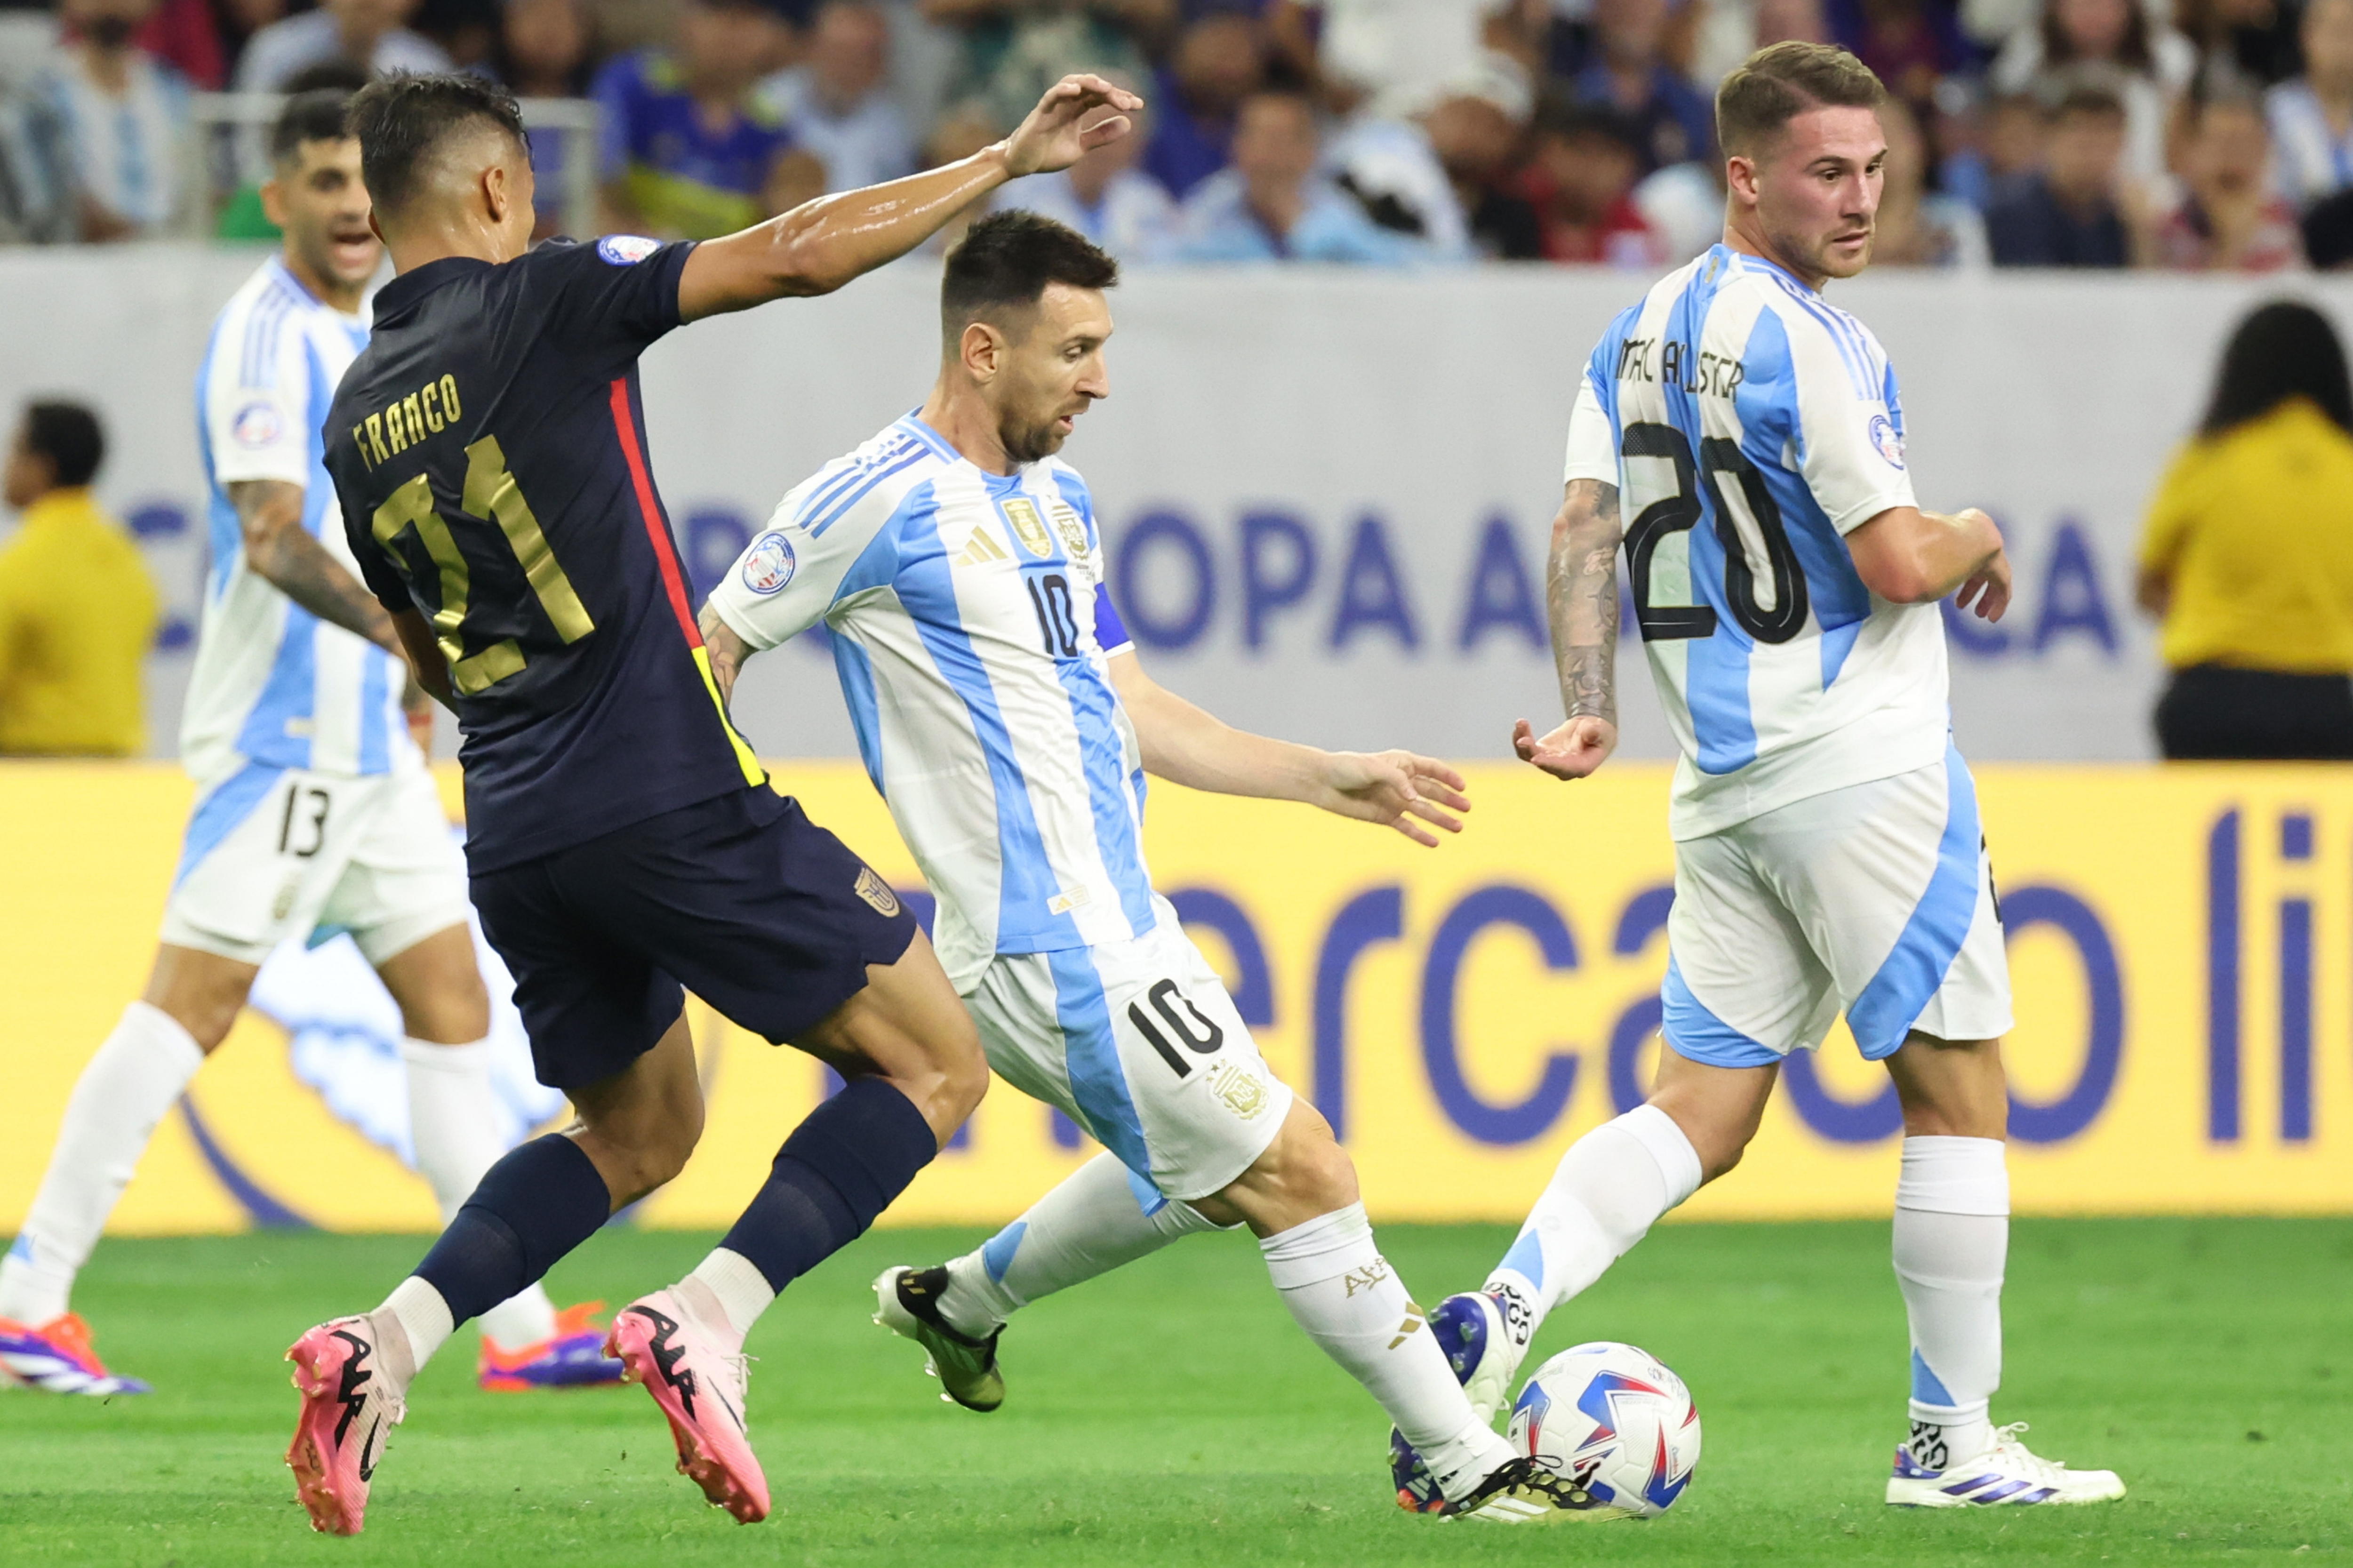 Argentina elimina a Ecuador y pasa a semis gracias al 'Dibu' Martínez